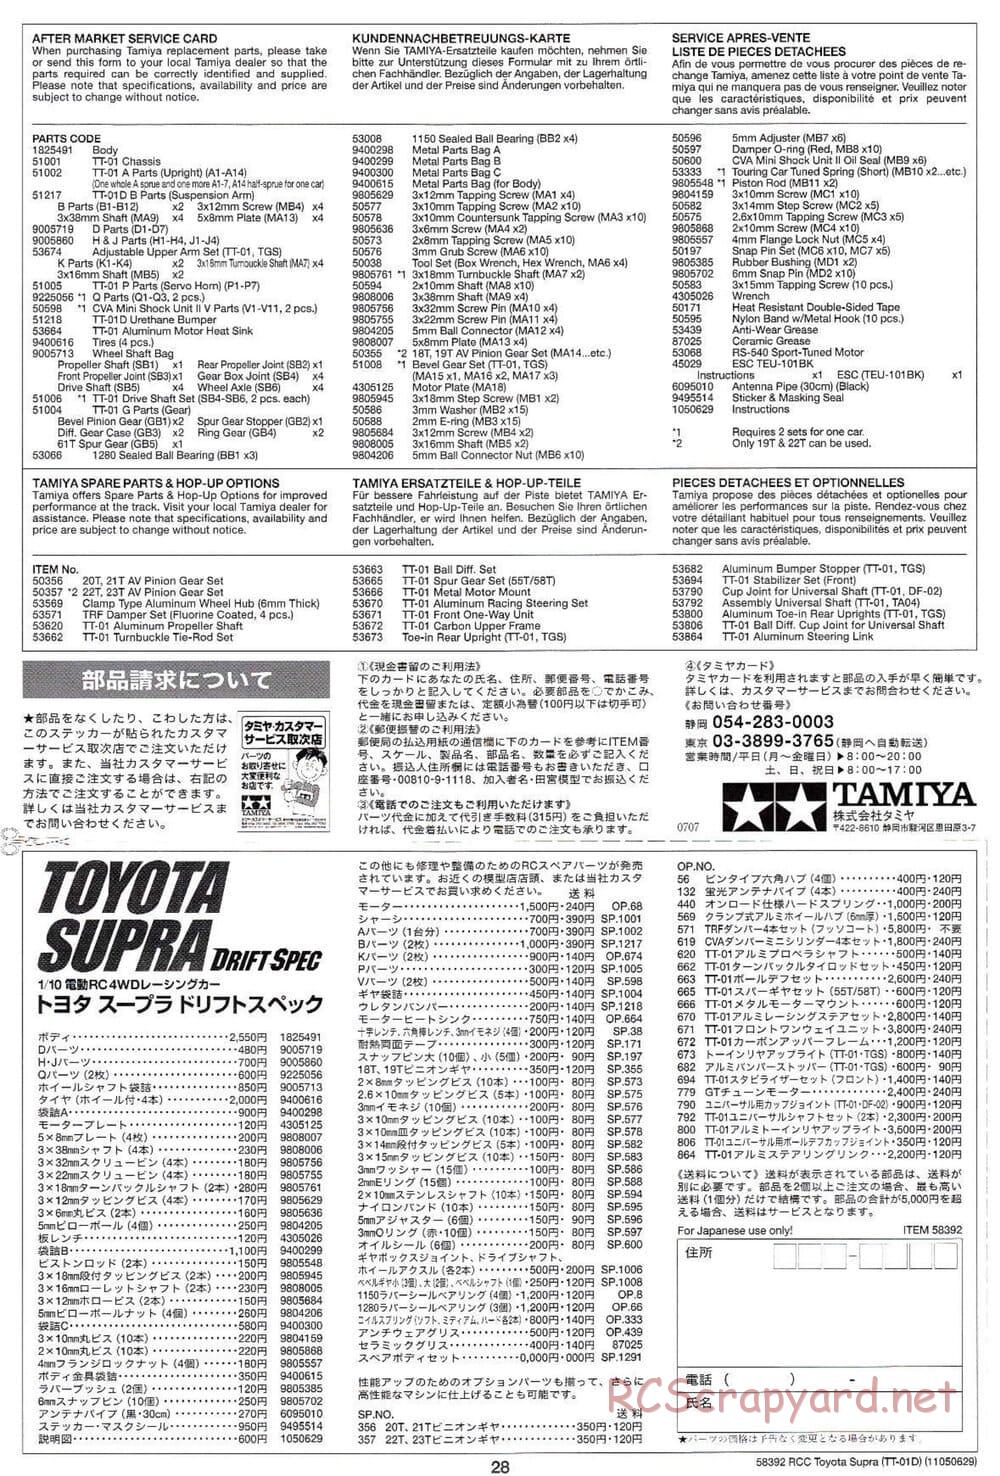 Tamiya - Toyota Supra - Drift Spec - TT-01D Chassis - Manual - Page 28